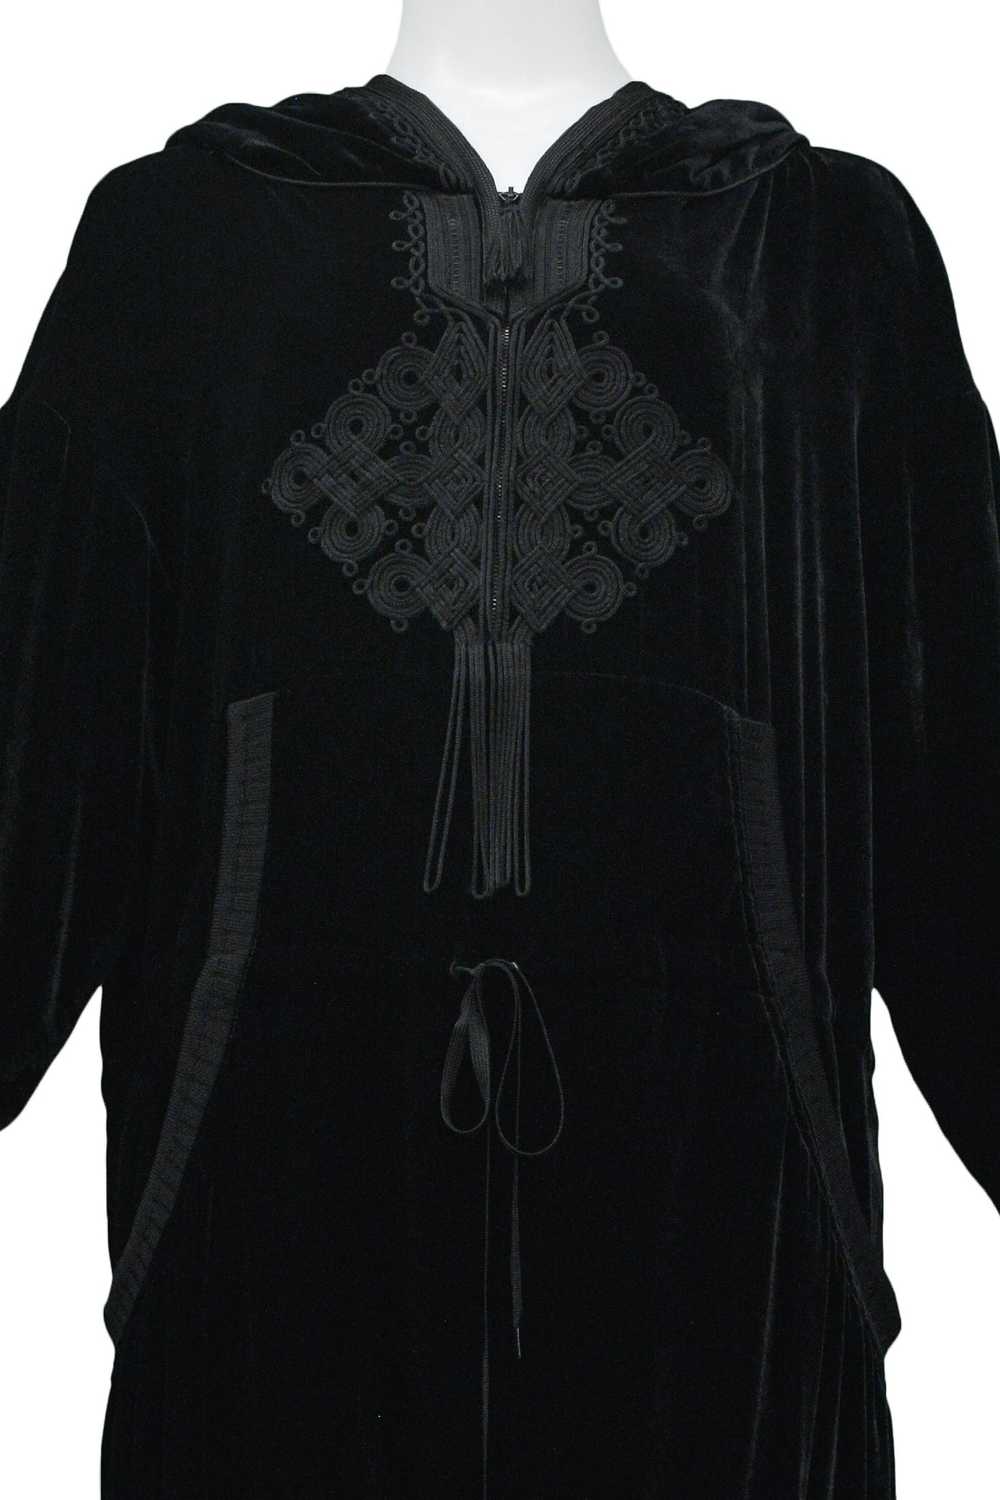 GAULTIER BLACK VELVET HOODIE TUNIC DRESS 2010 - image 4